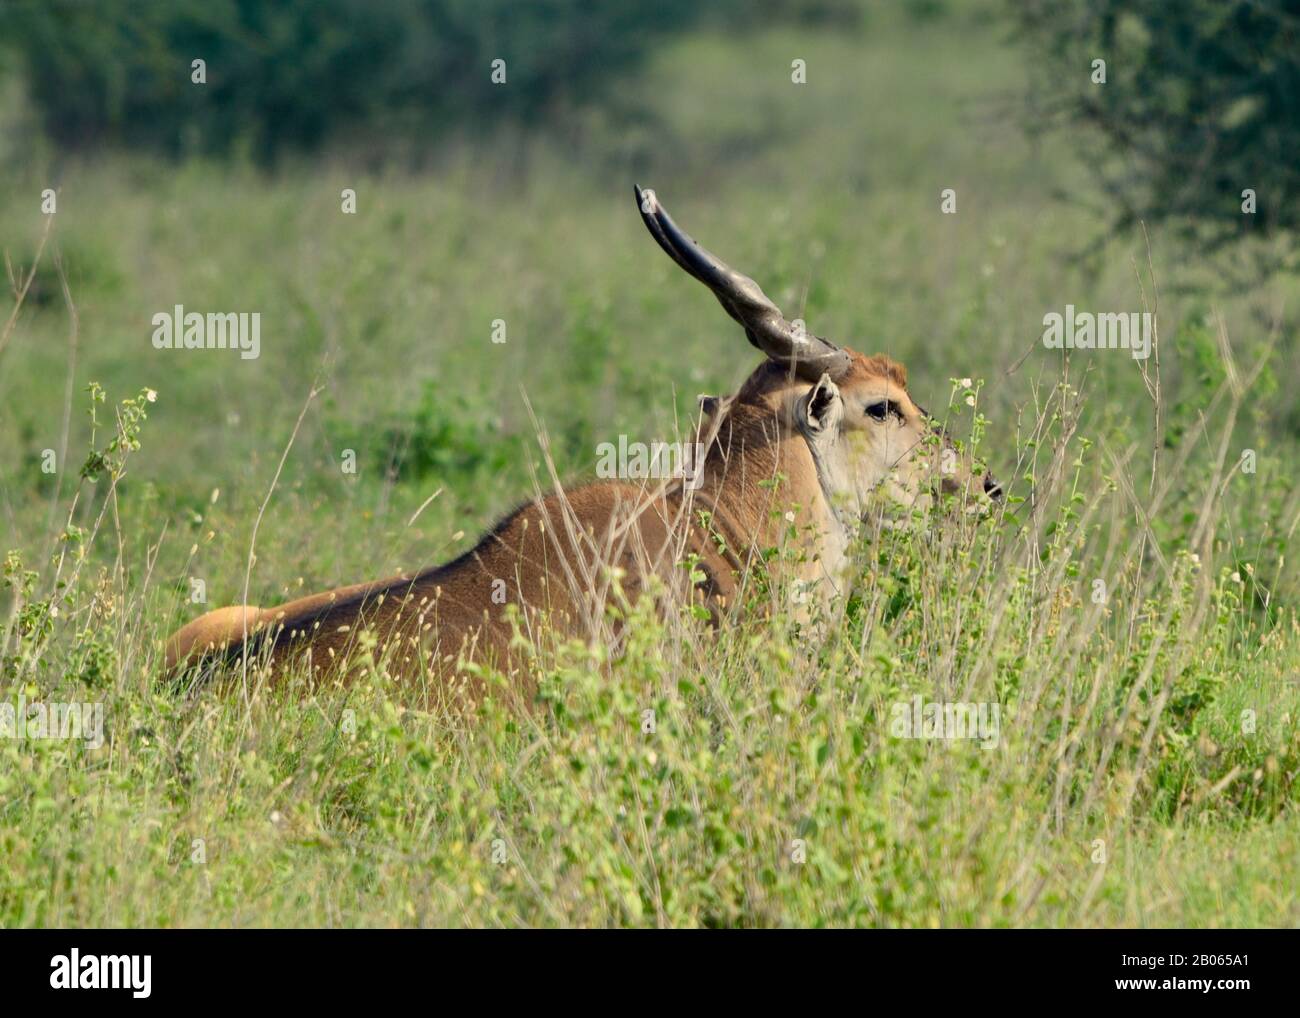 An Eland rests in tall grass in Nairobi National Park, Kenya. (Taurotragus oryx) Stock Photo